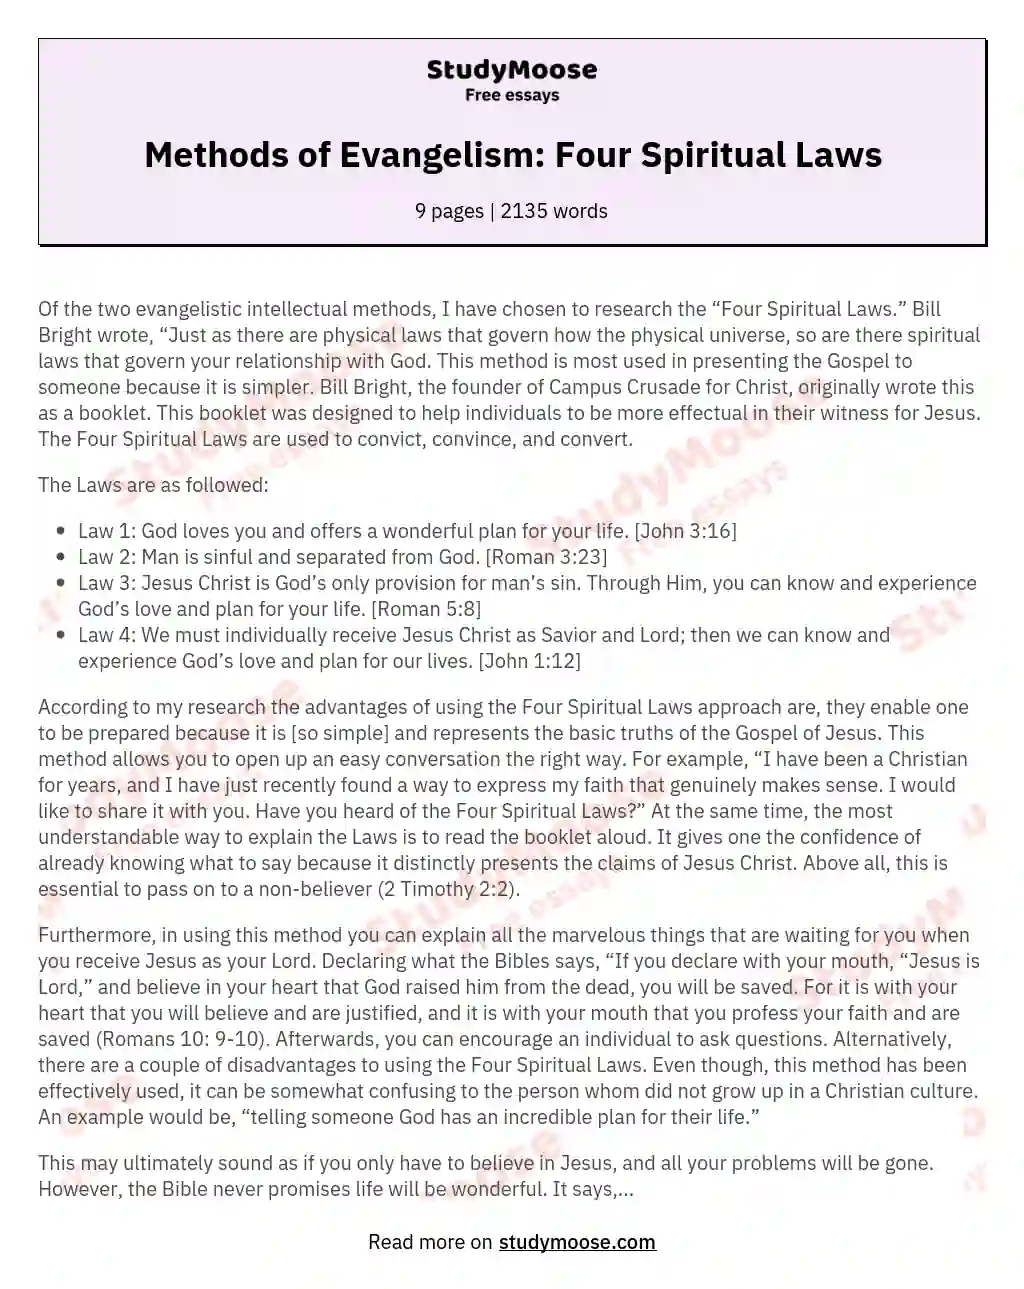 Methods of Evangelism: Four Spiritual Laws essay